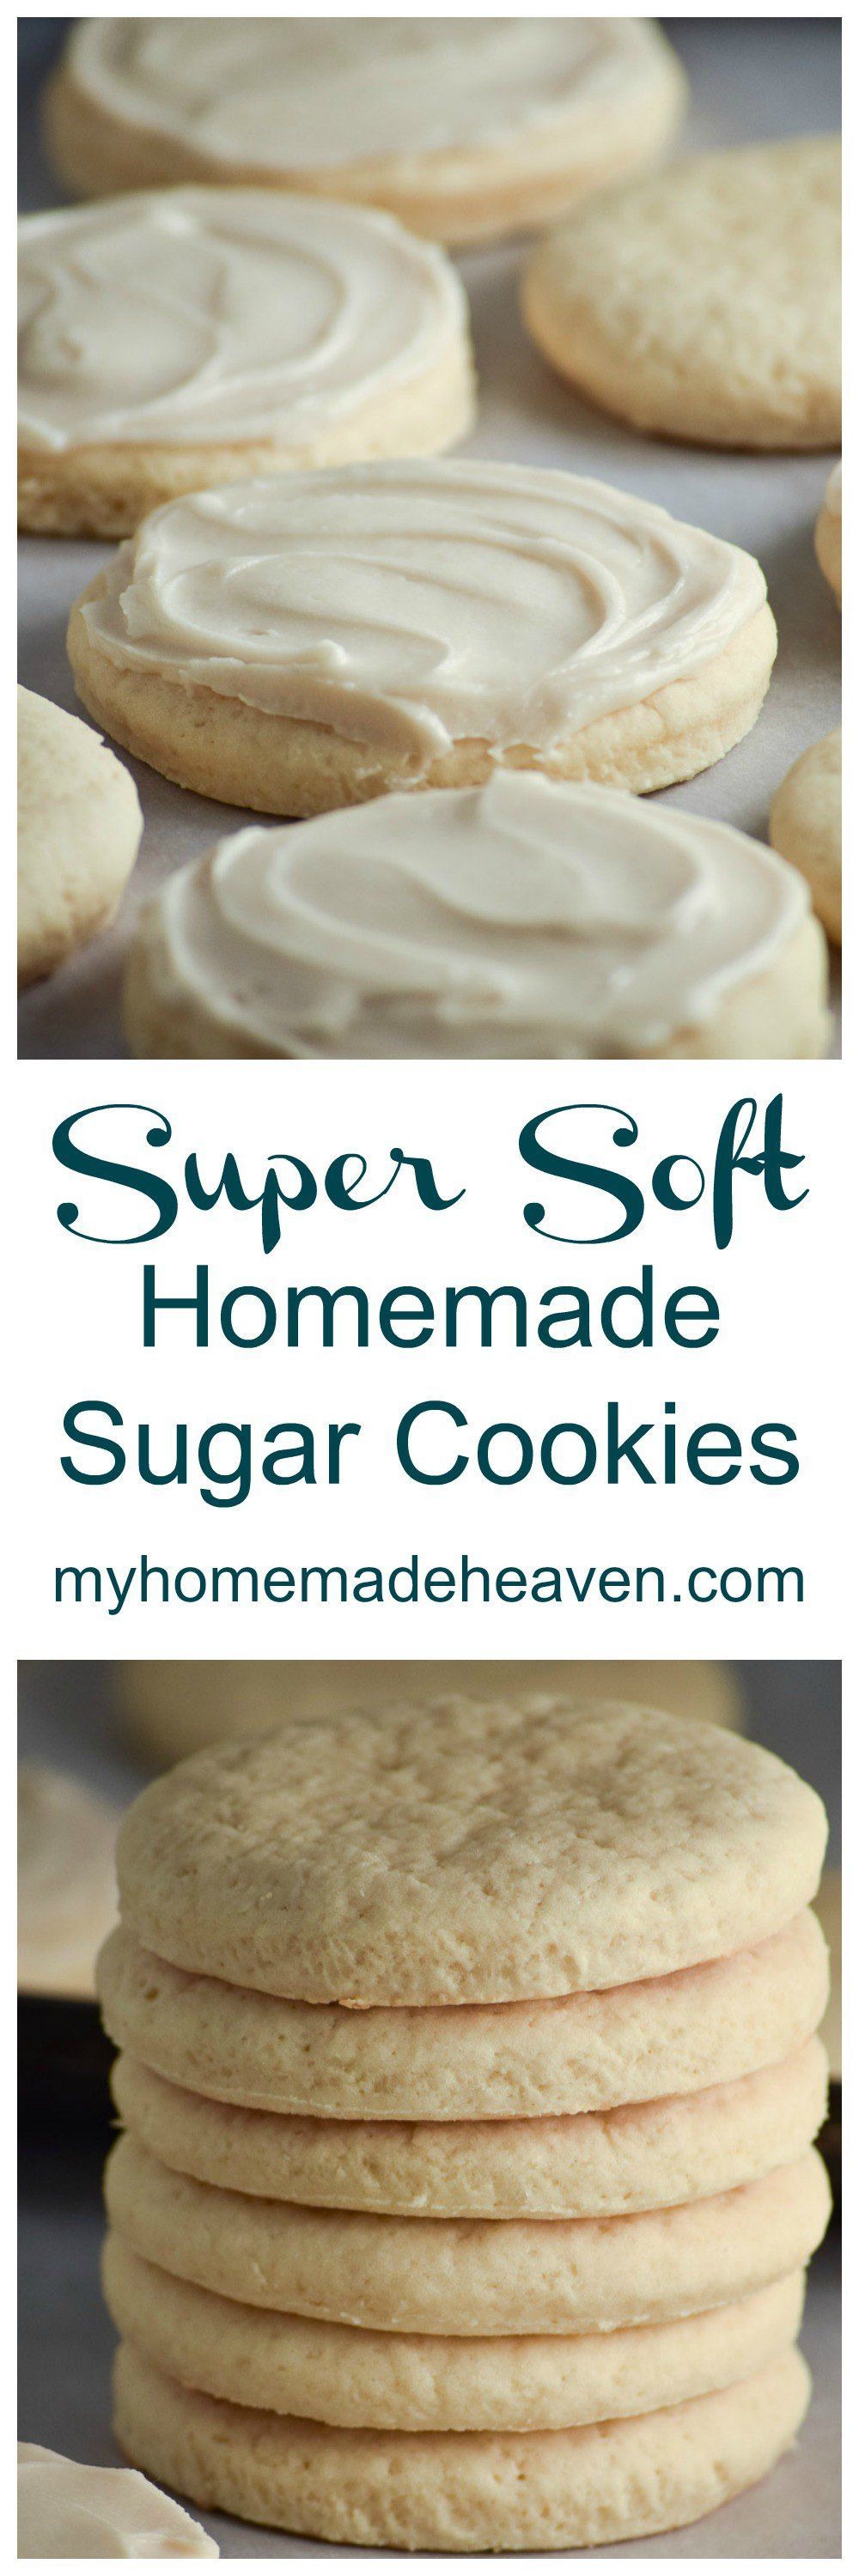 Super Soft Homemade Sugar Cookies